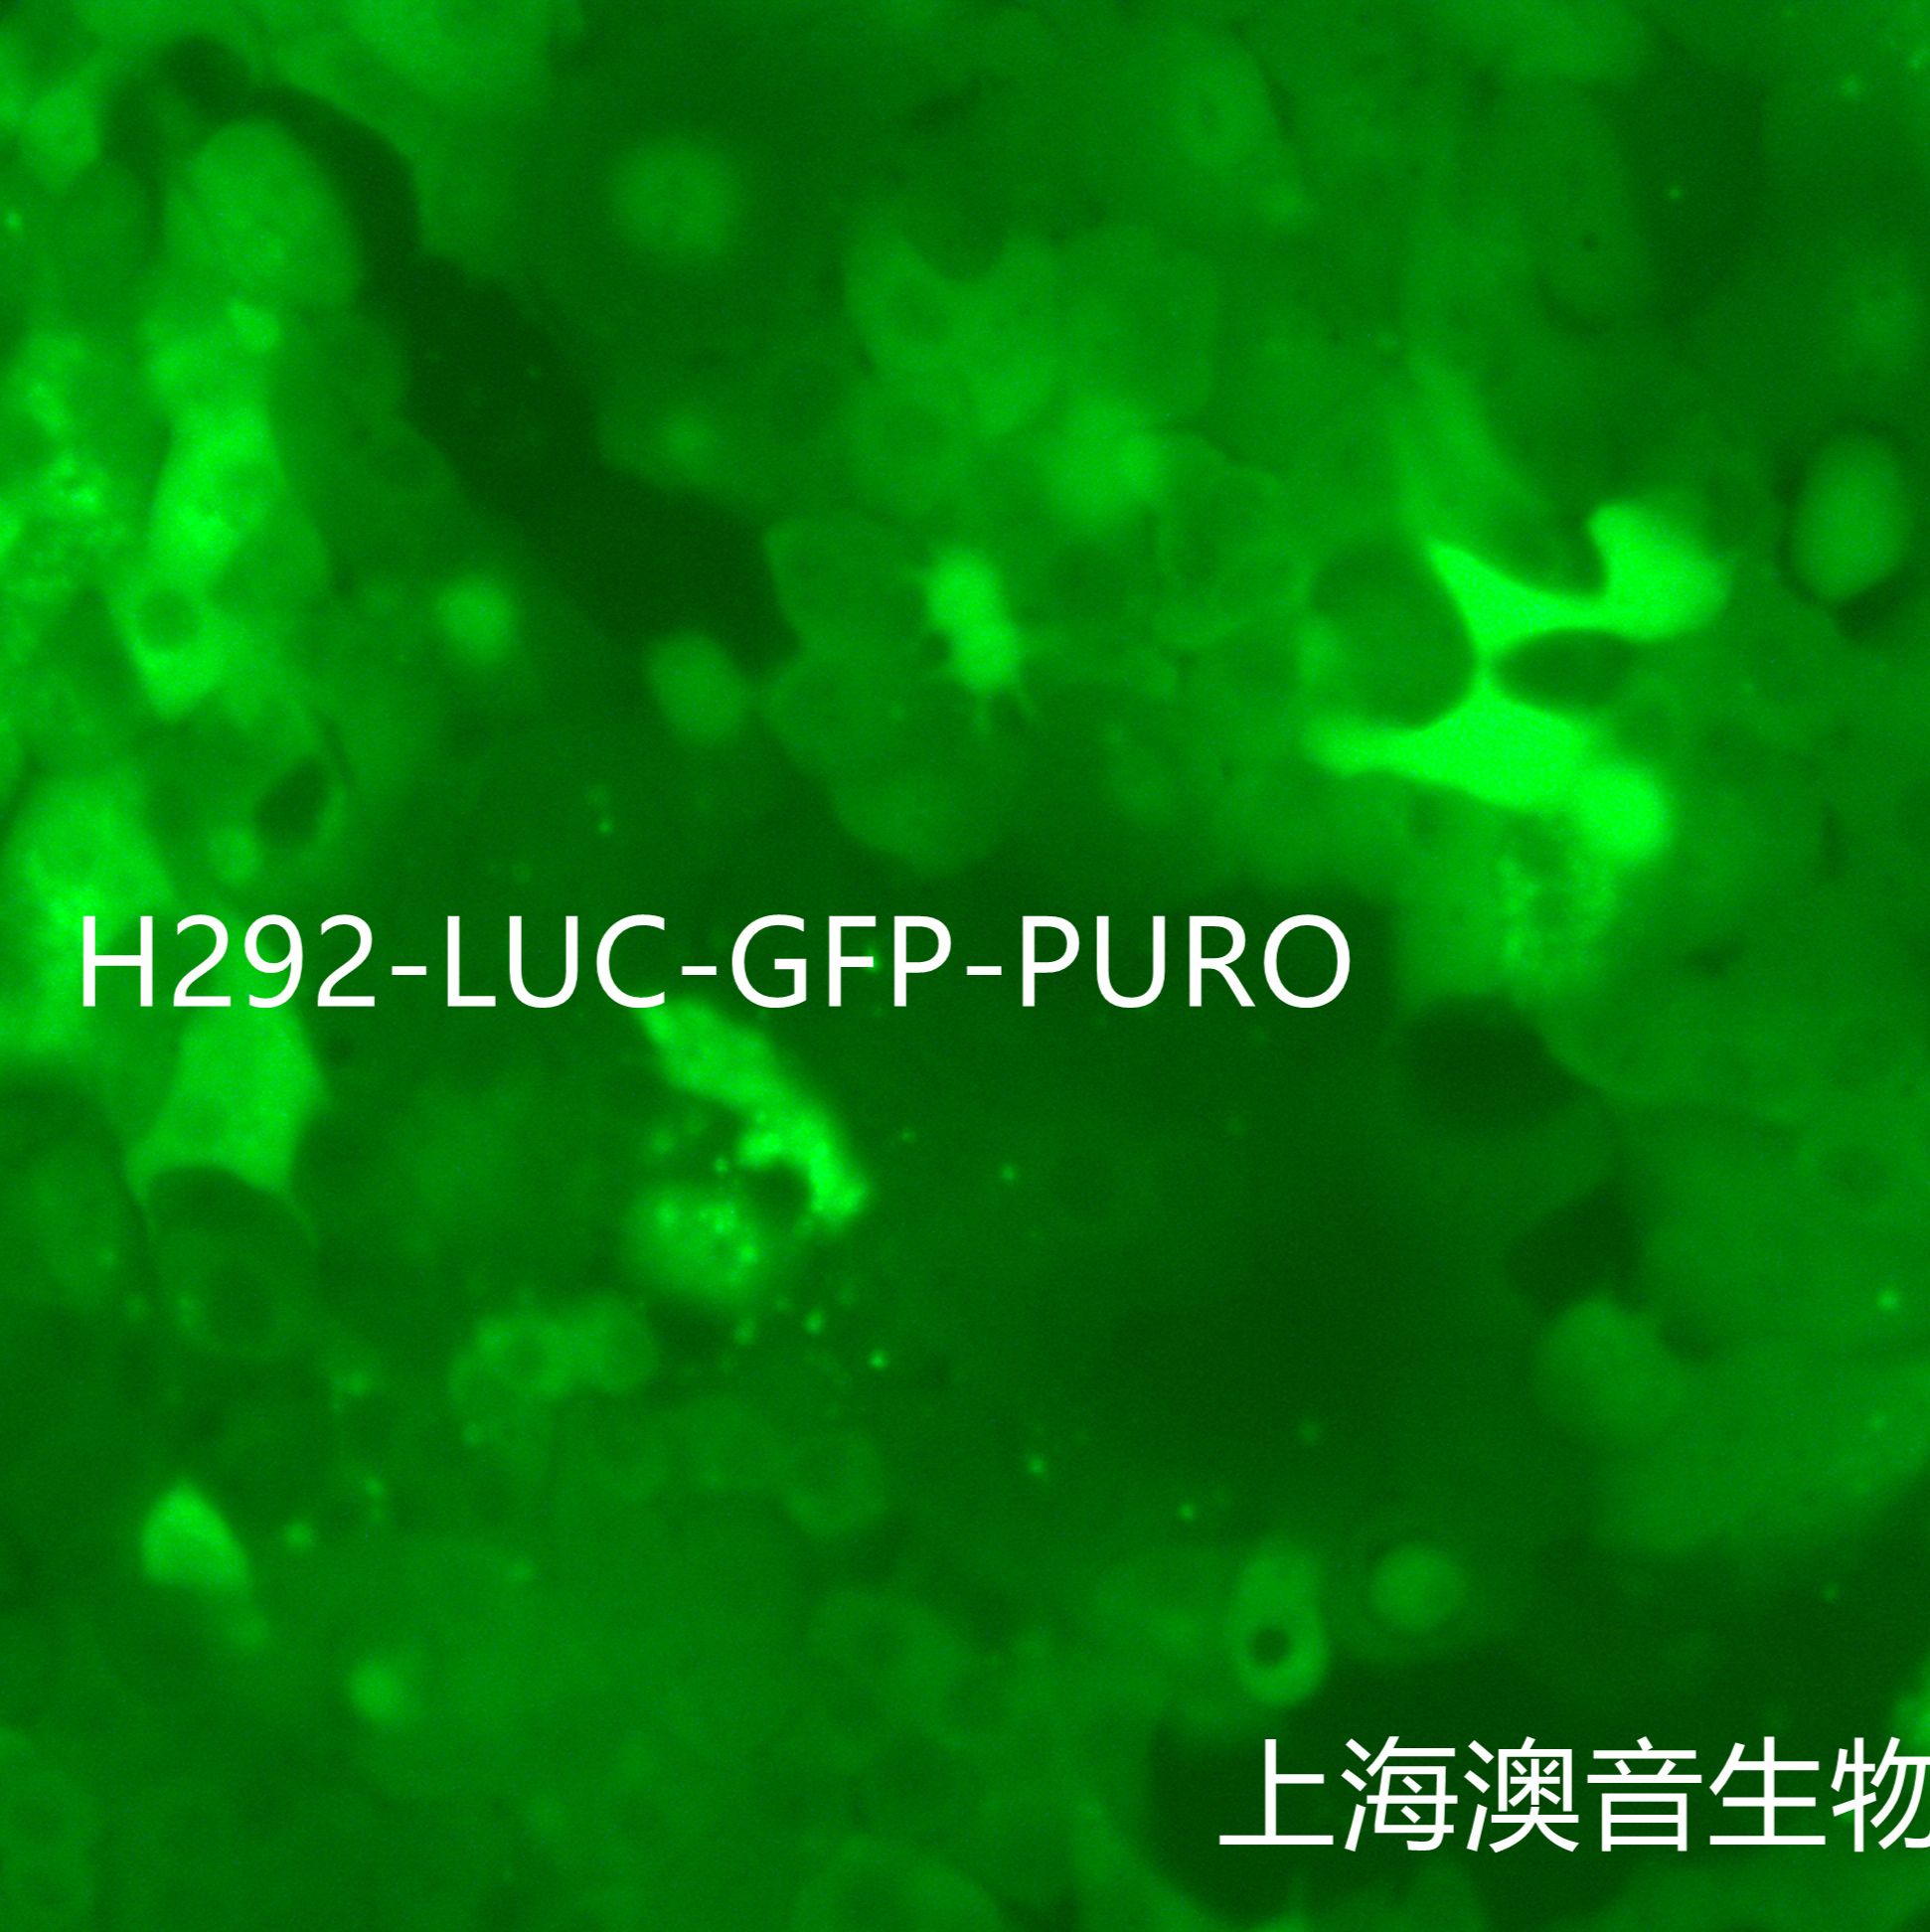 NCI-H292-LUC-GFP-Puro【H292-LUC;H292-GFP】双标记的人肺粘液上皮样癌细胞